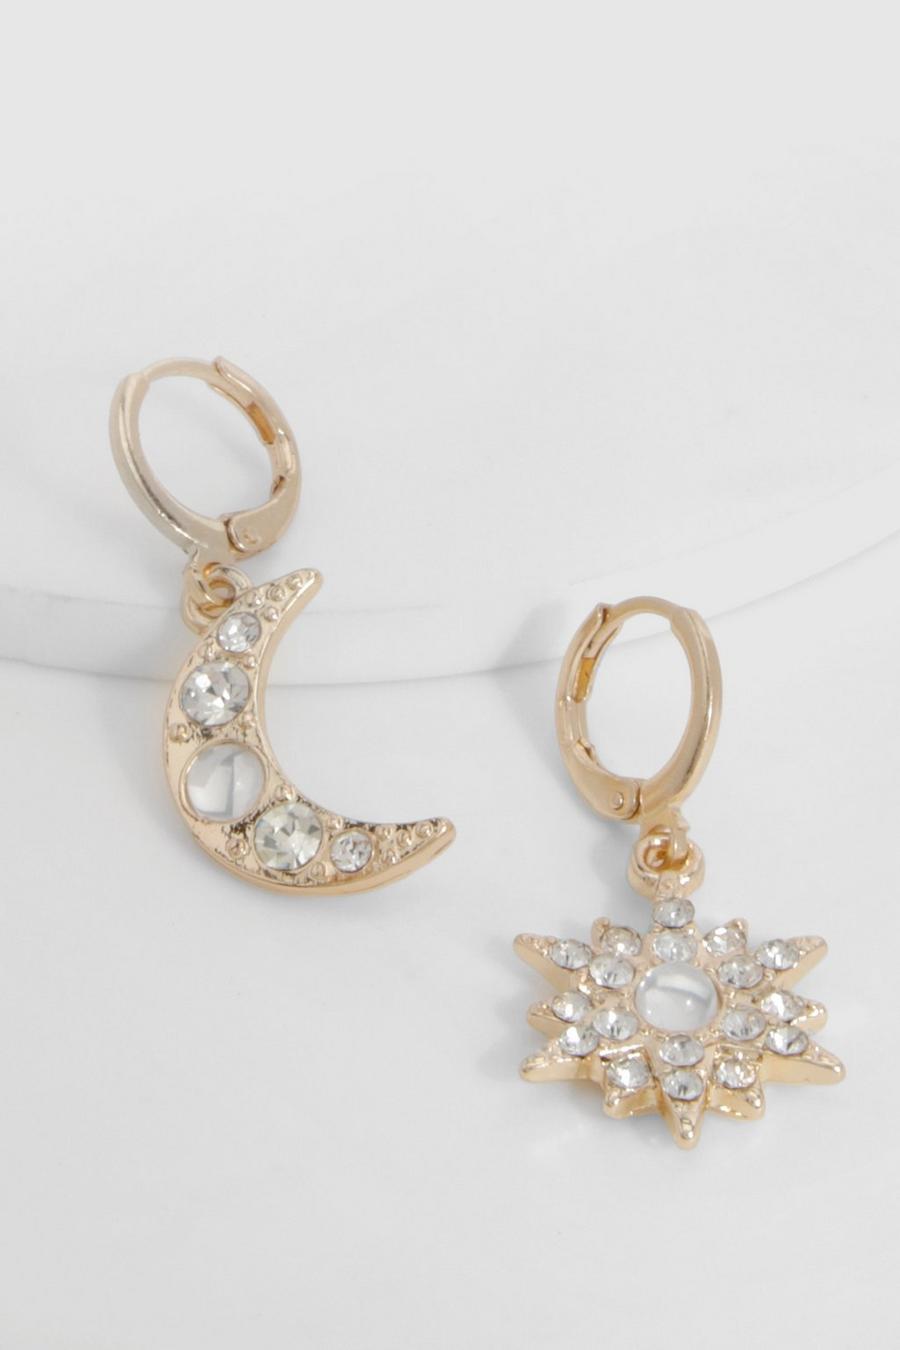 Gold Celestial Hoop Earrings